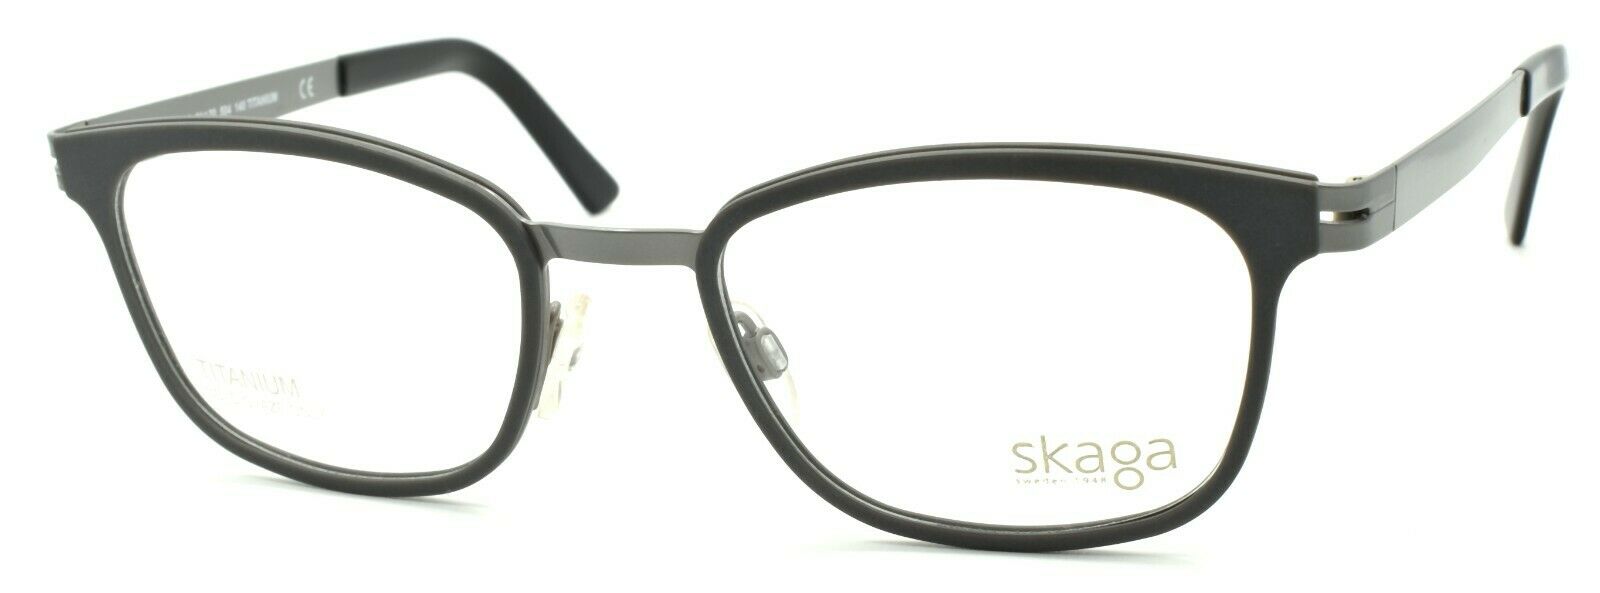 1-Skaga 2540-U Daelvi 504 Men's Eyeglasses Frames TITANIUM 51-20-140 Silver-IKSpecs